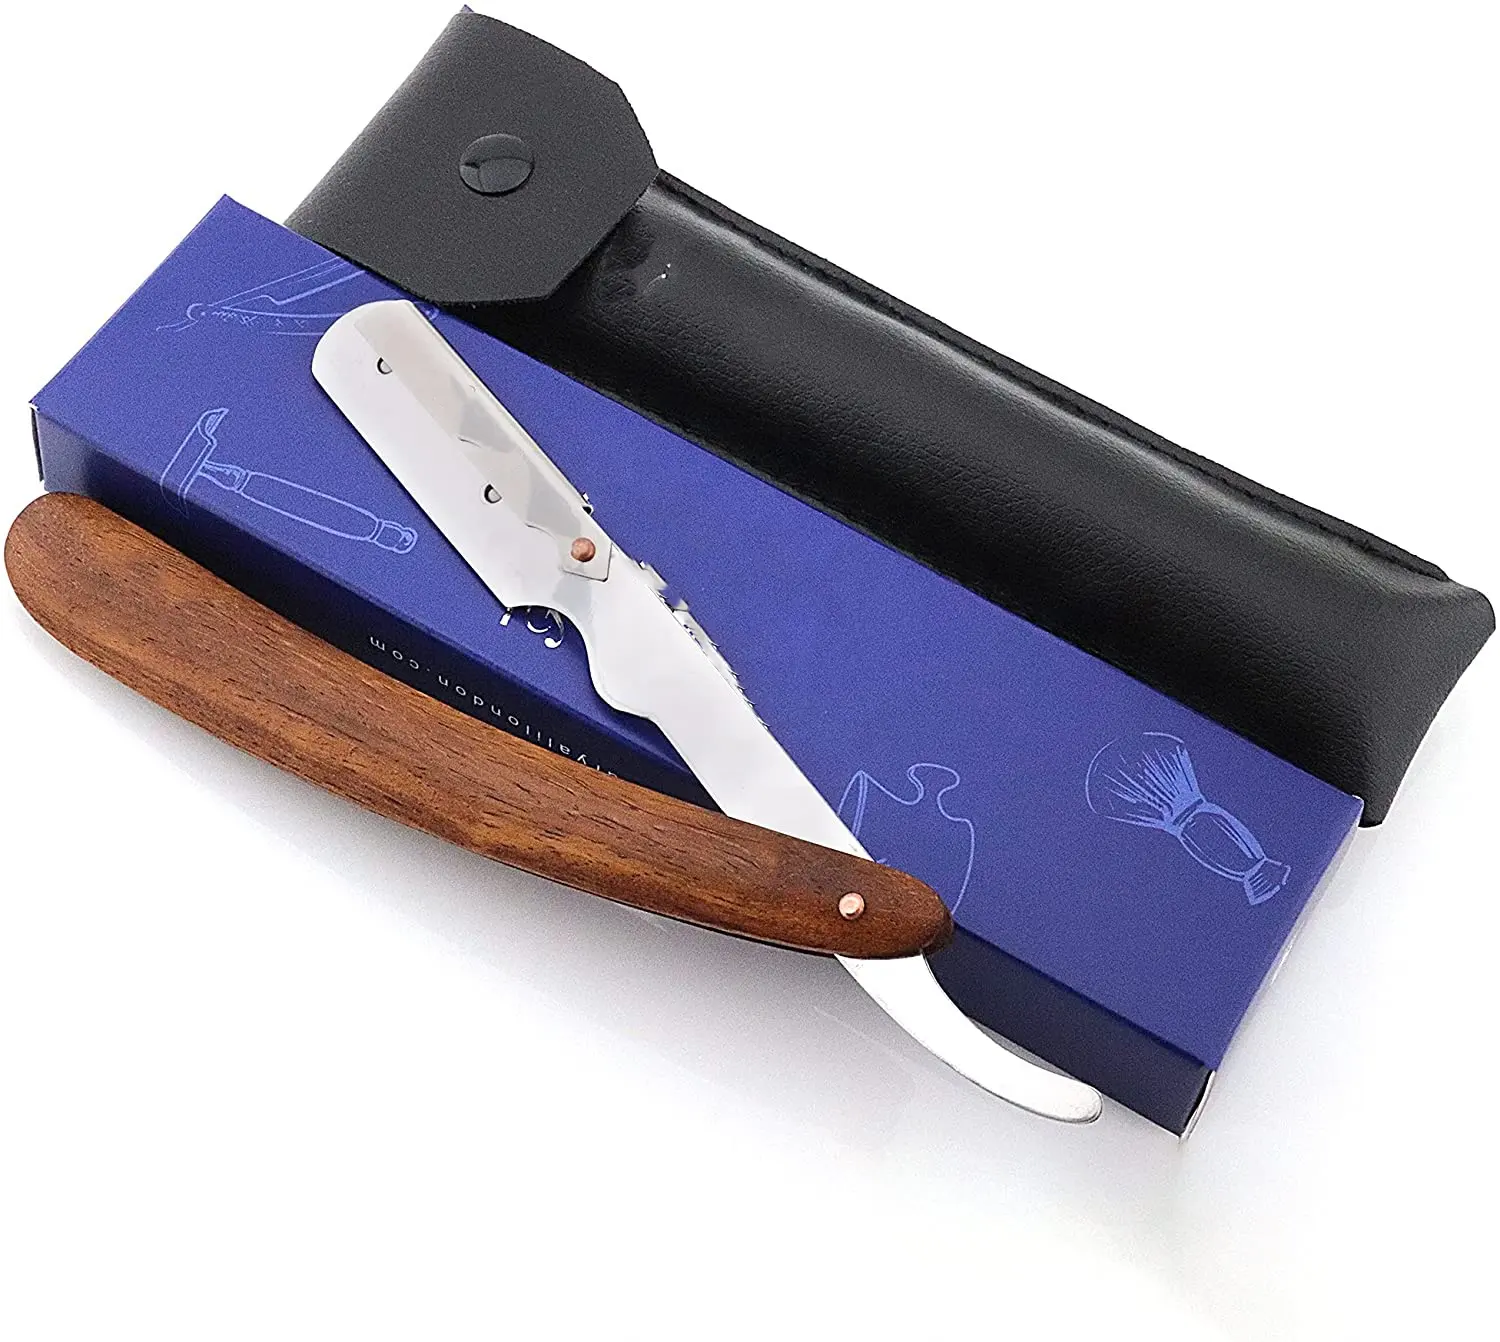 Straight razor with interchangeable blade system Premium straight razor set with wooden handle Case and razor blades